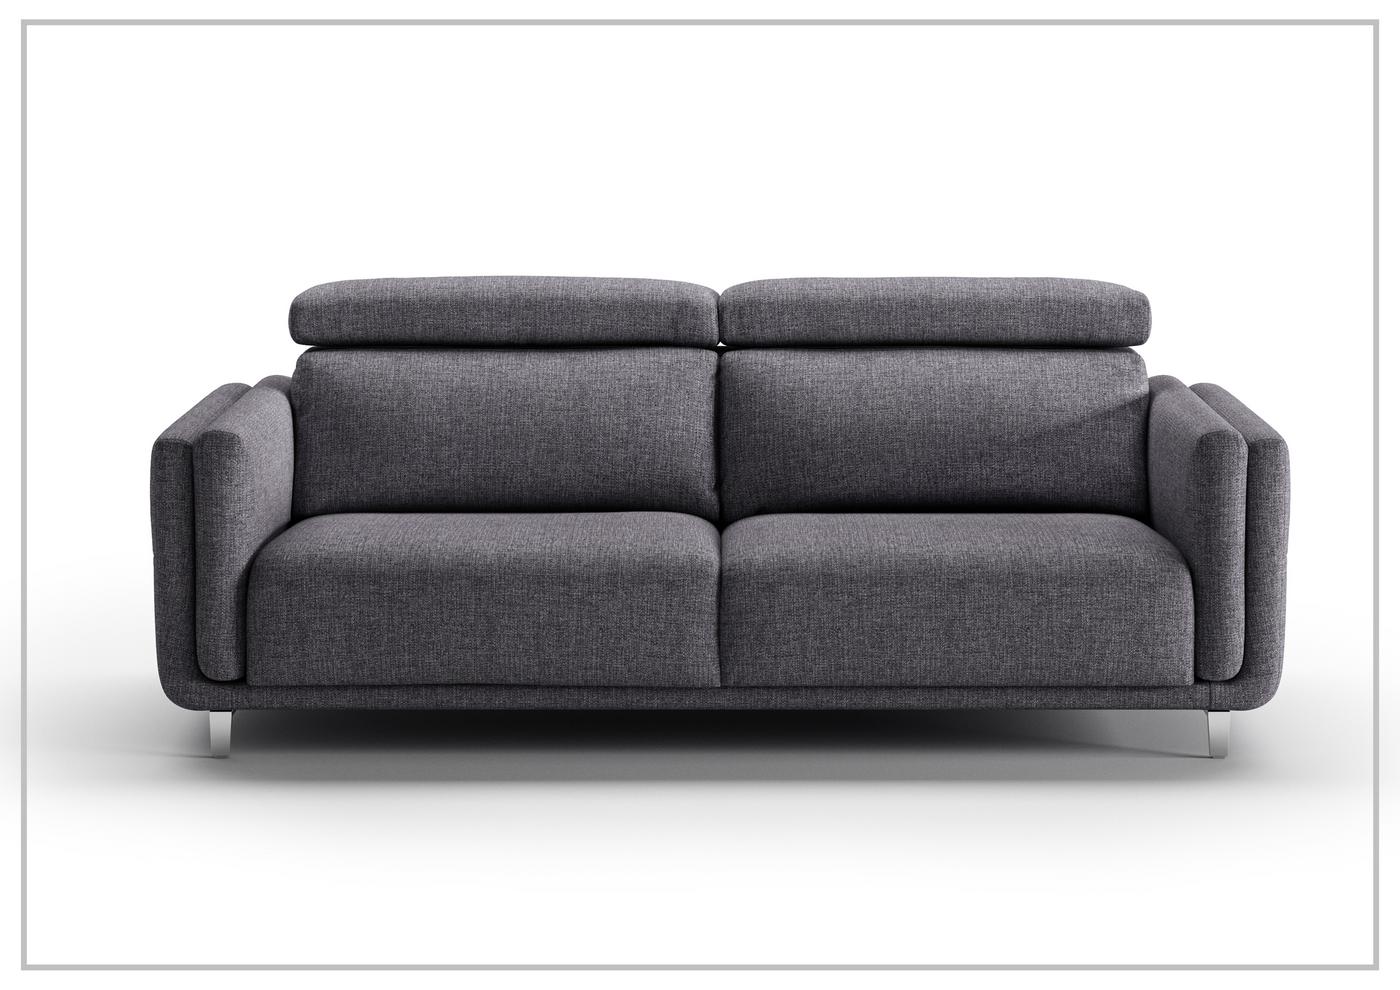 Paris Fabric Sleeper Sofa with Ratchet Adjustable Headrests